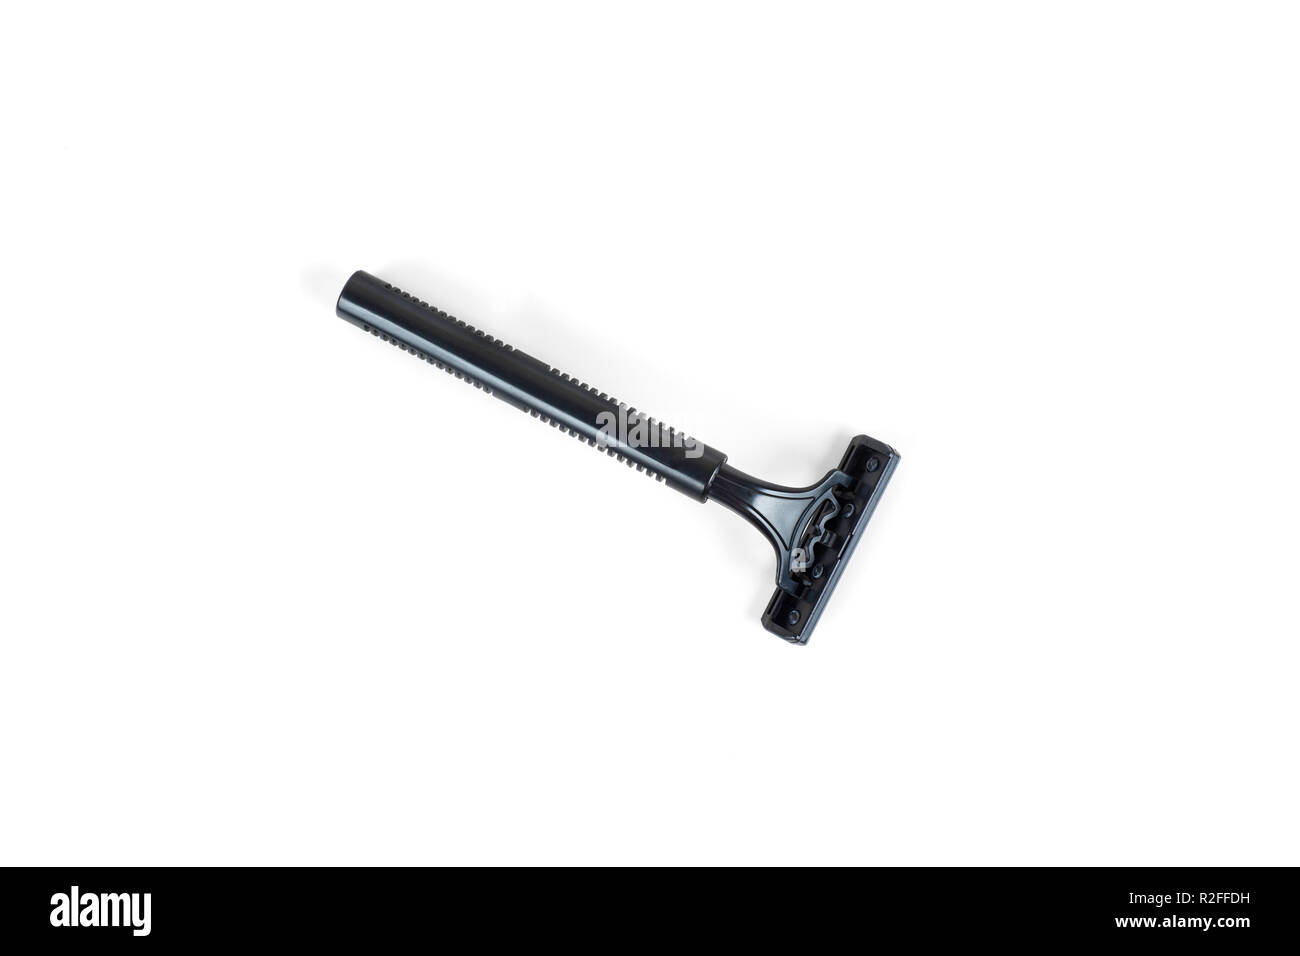 New disposable razor blade, on white background, isolated. Stock Photo